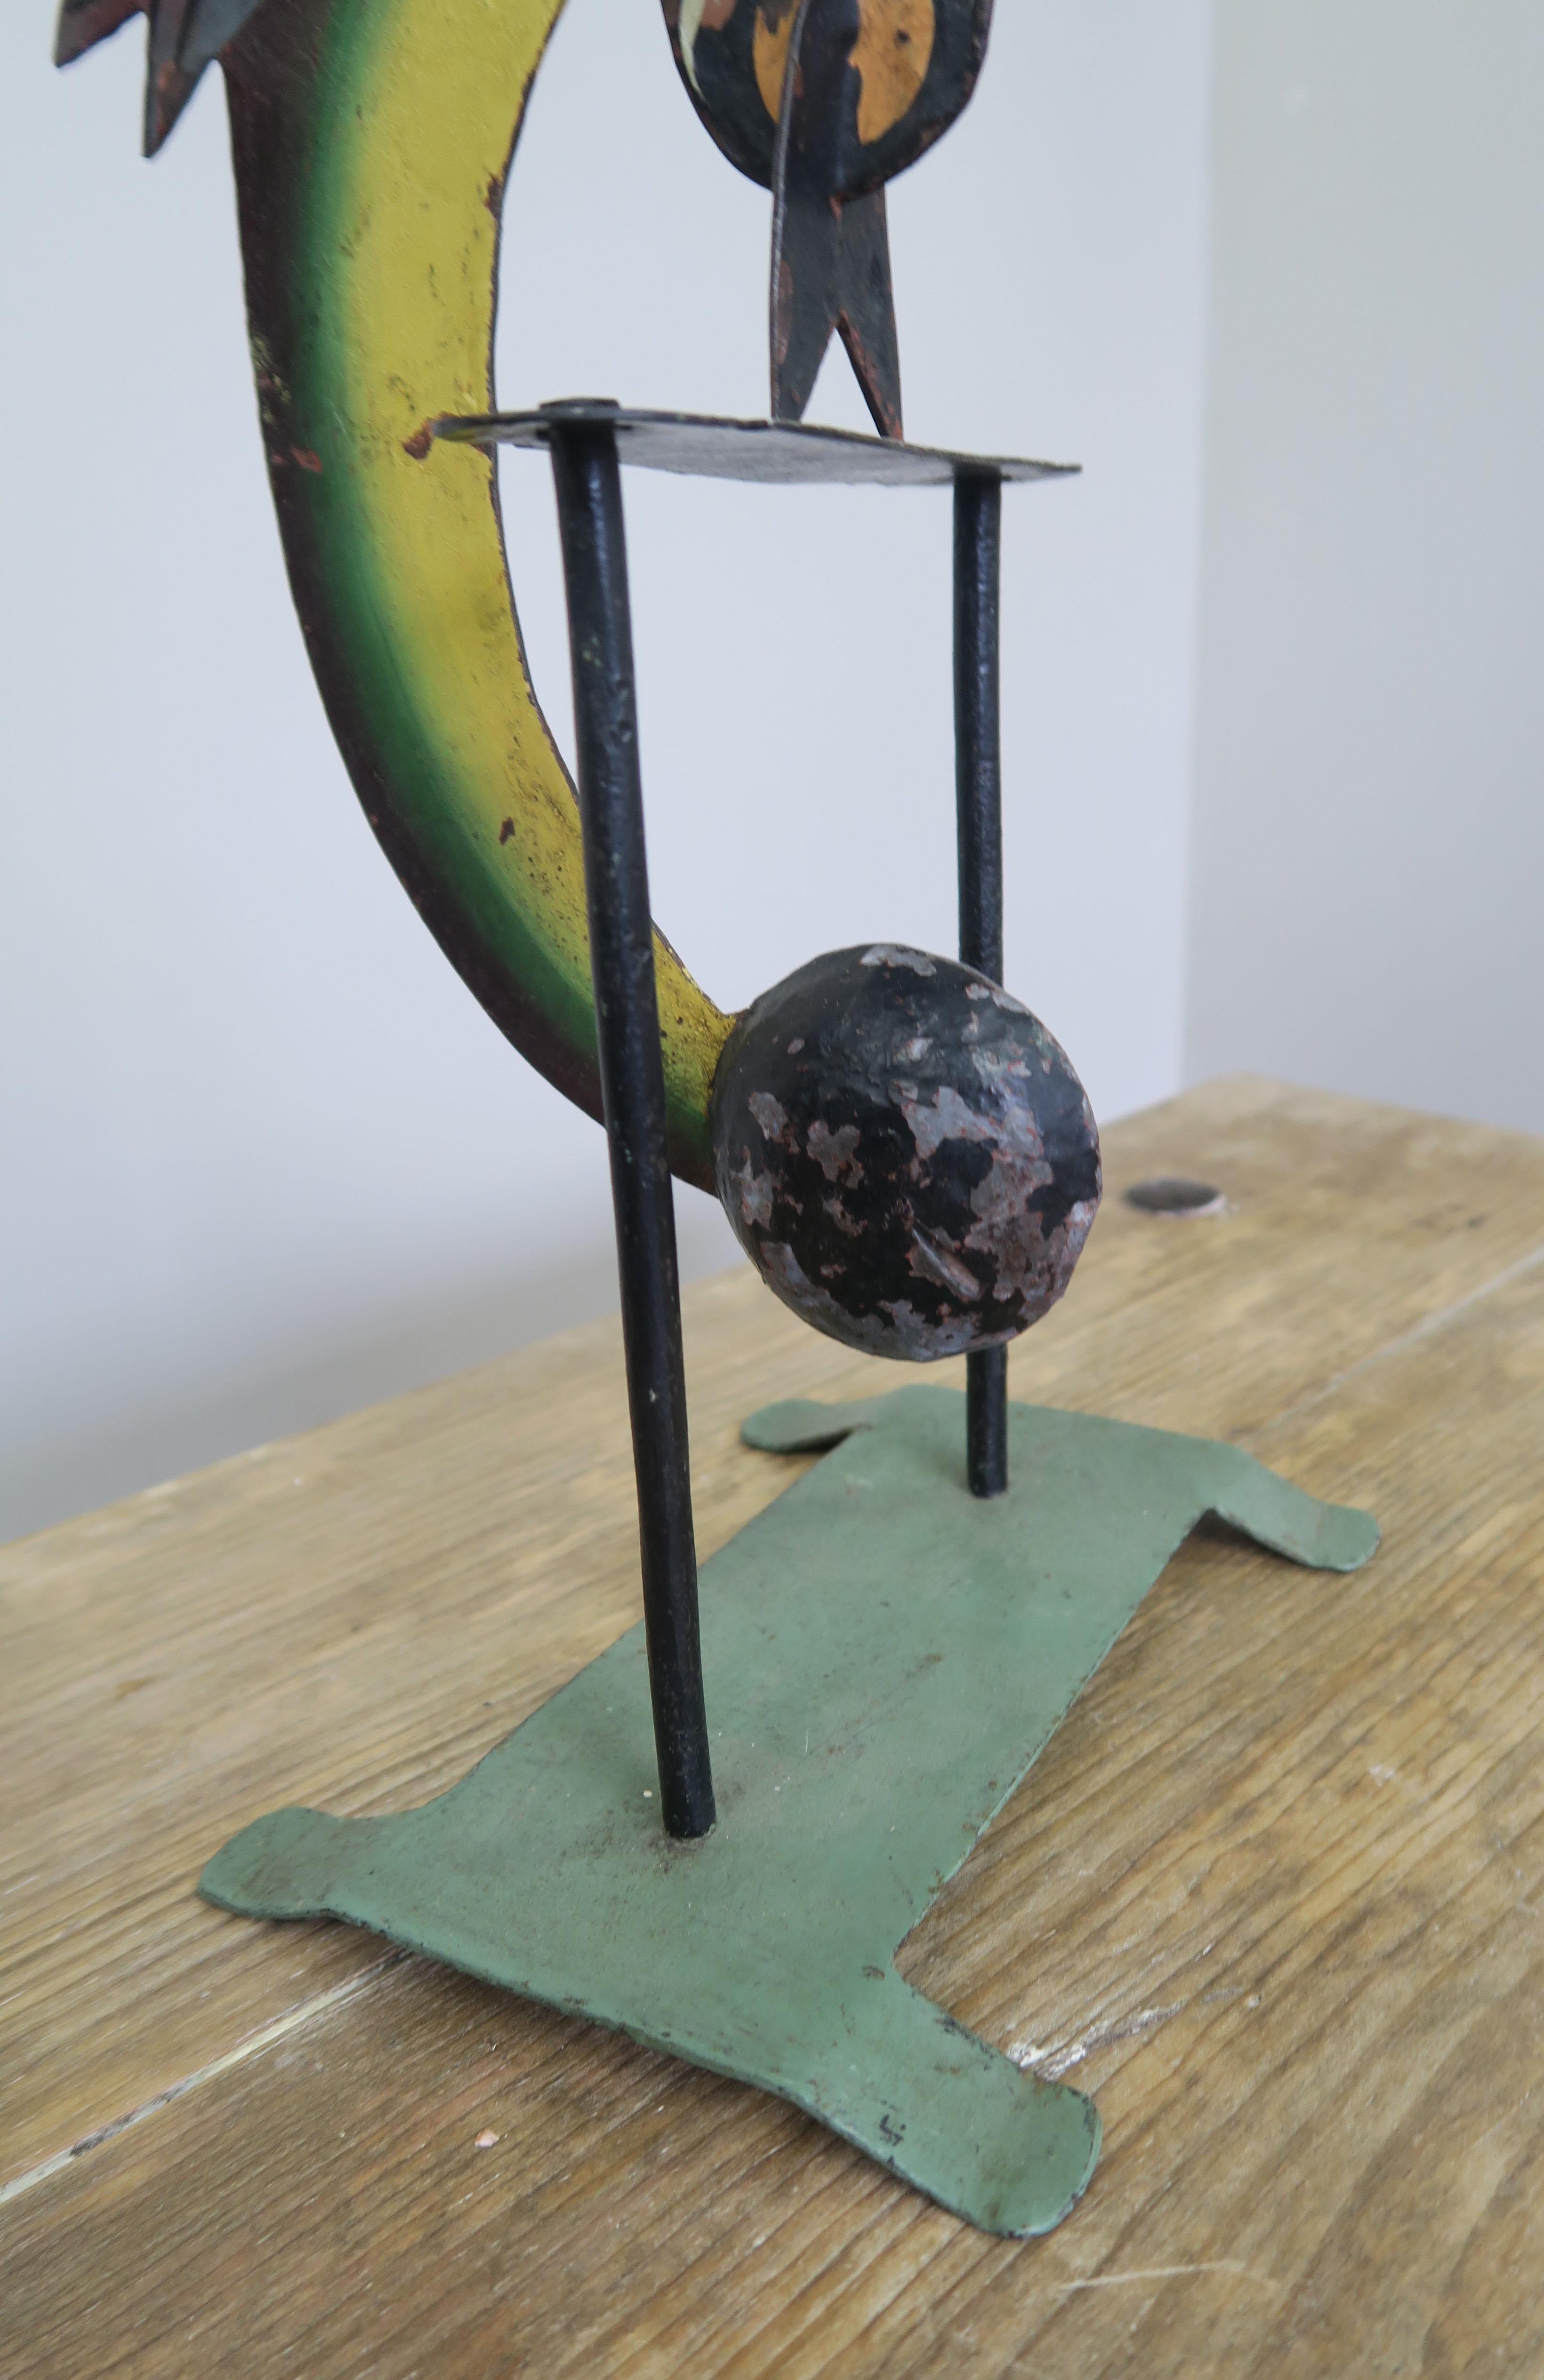 Iron Charming American Folk Art Piece Depicting Balancing Parrot